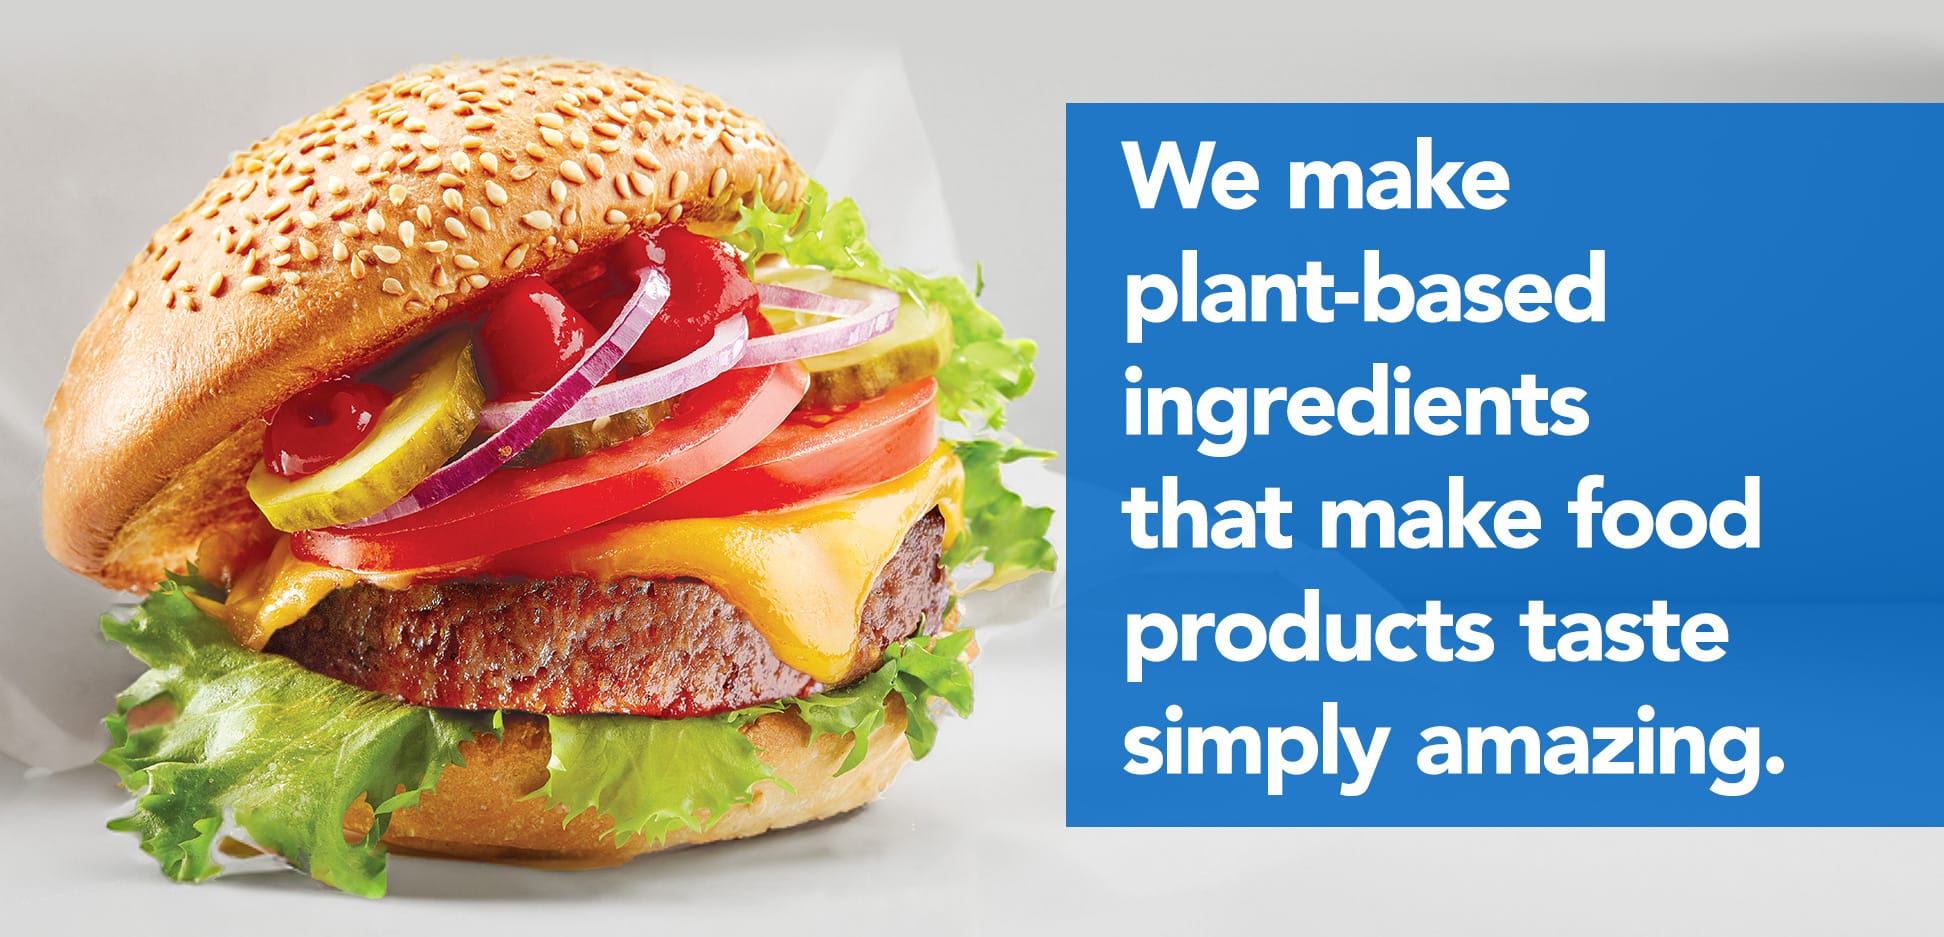 We make plant-based ingredients that make food products taste simply amazing.